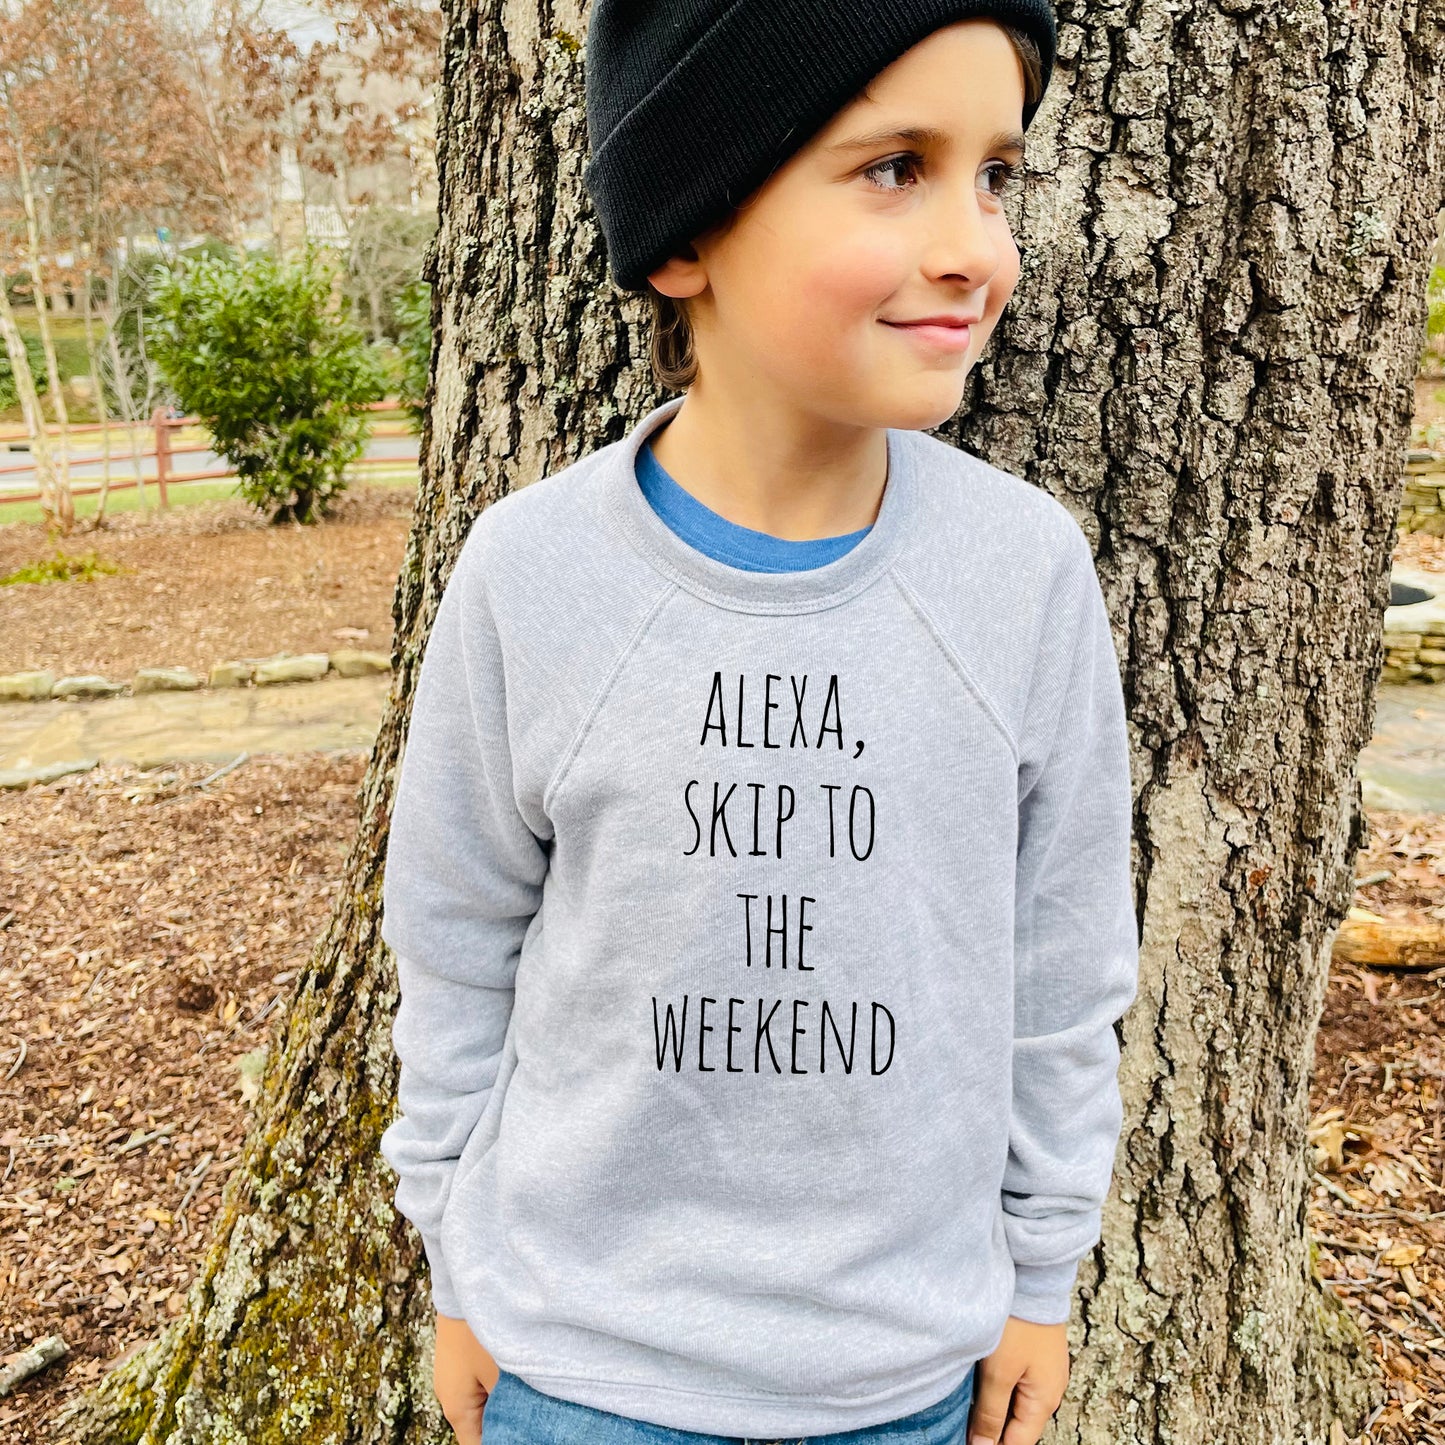 Alexa, Skip to the Weekend - Kid's Sweatshirt - Heather Gray or Mauve